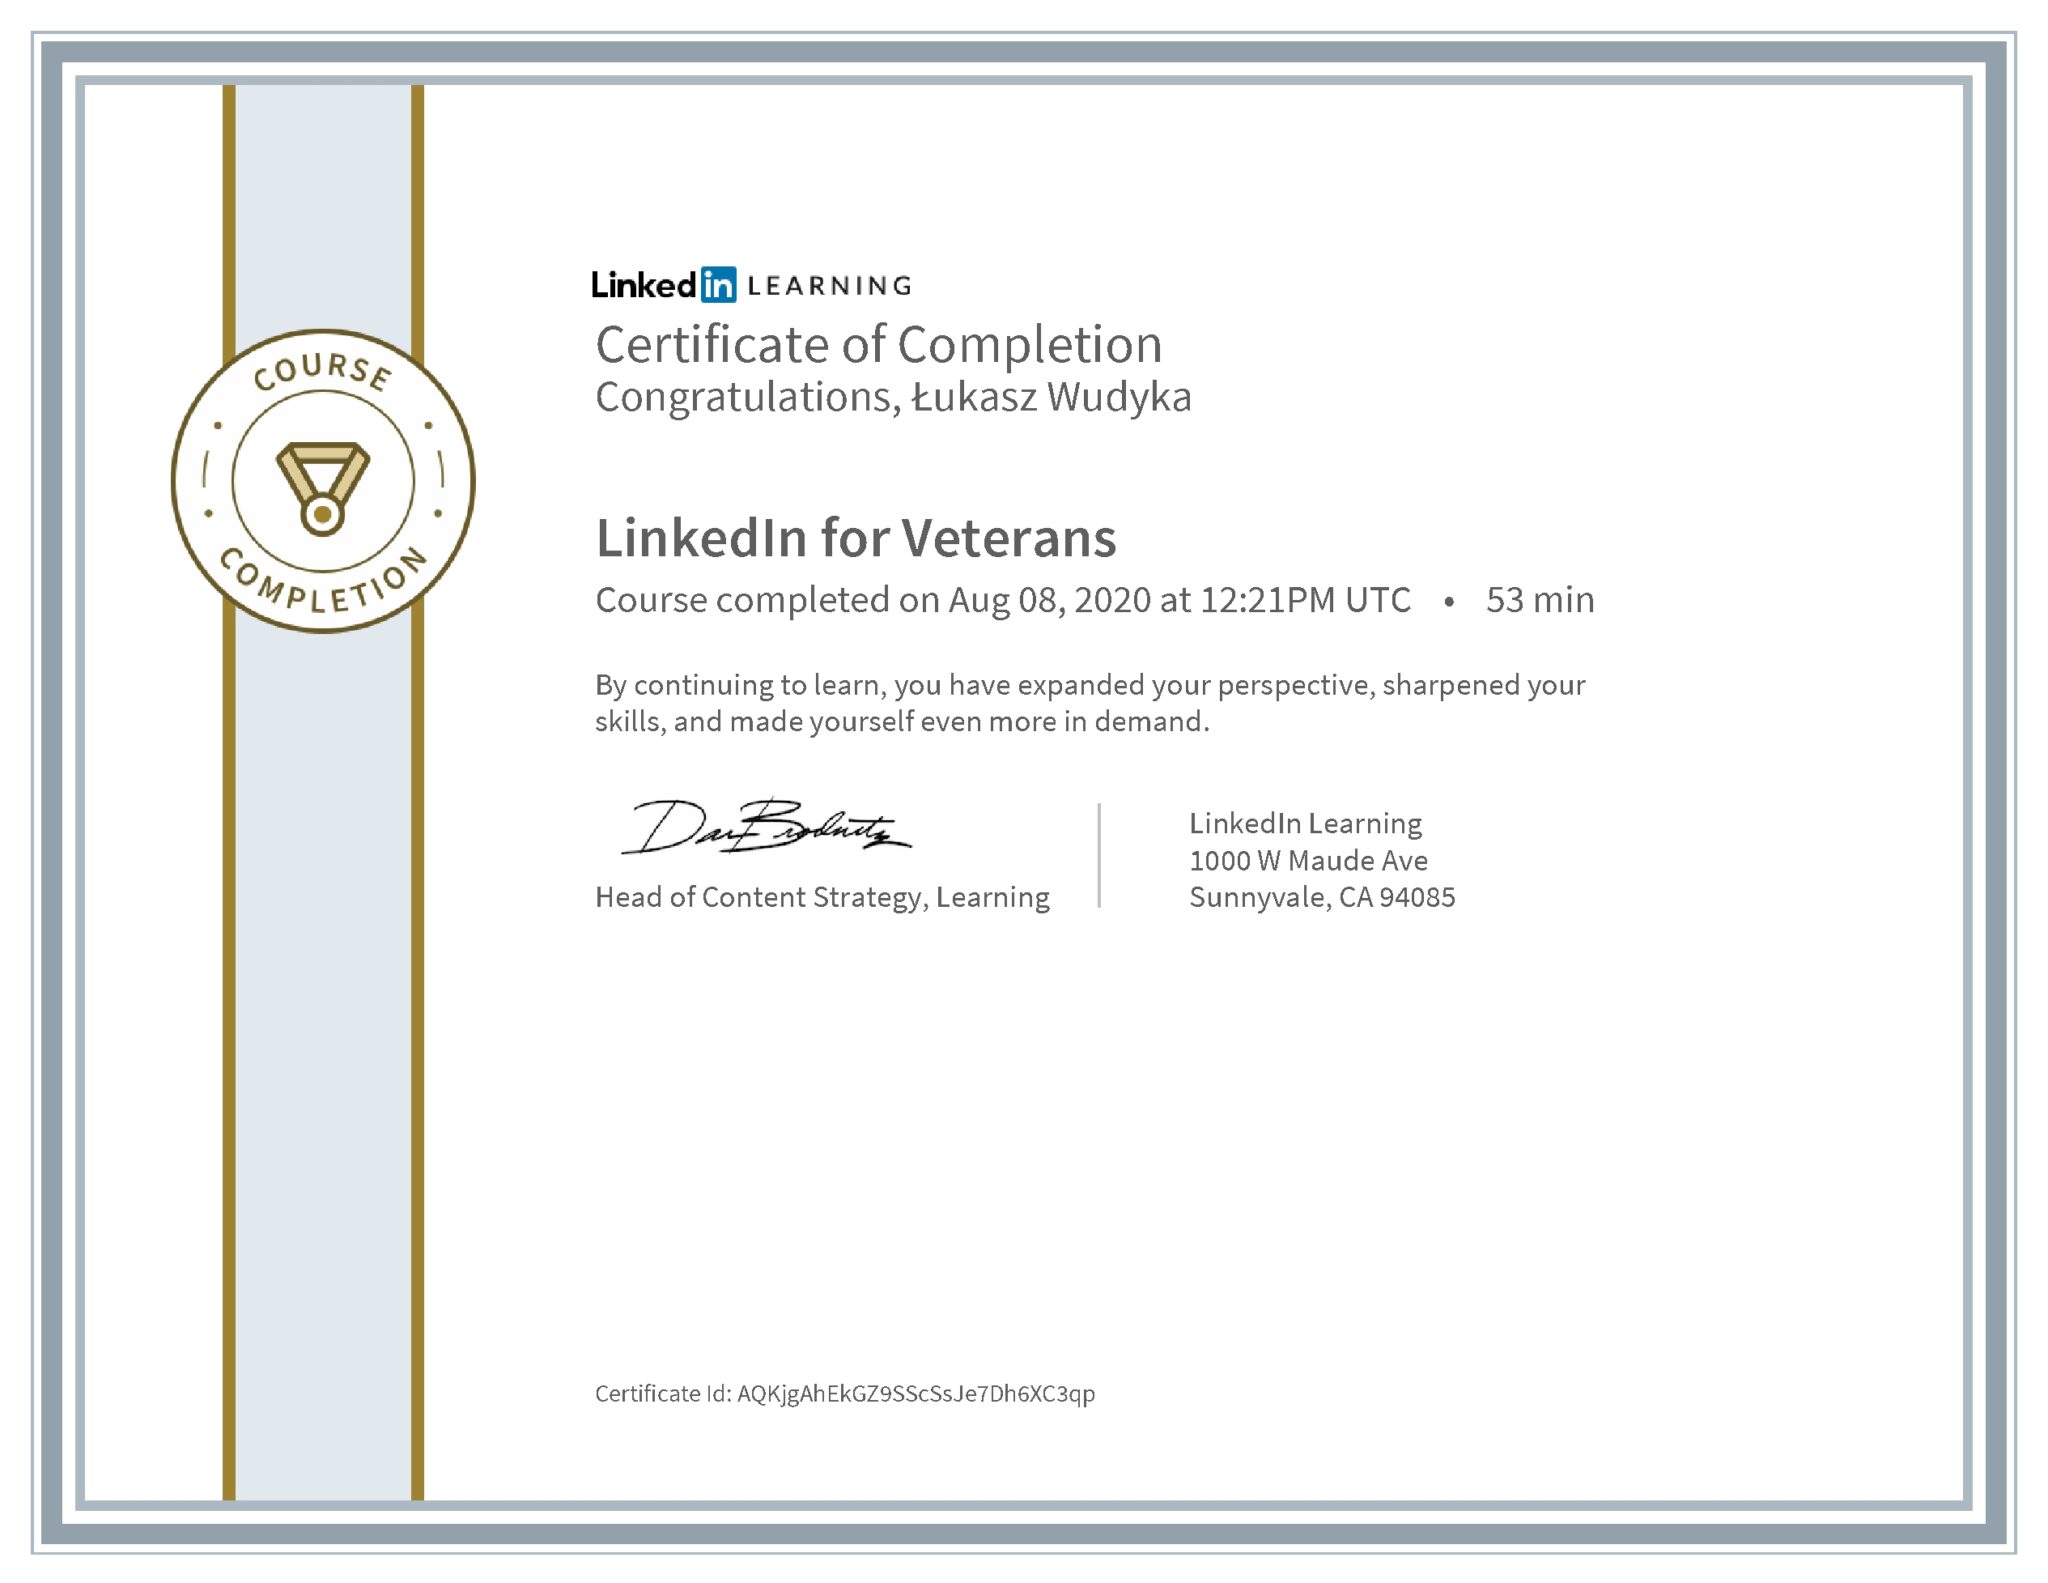 Łukasz Wudyka certyfikat LinkedIn LinkedIn for Veterans